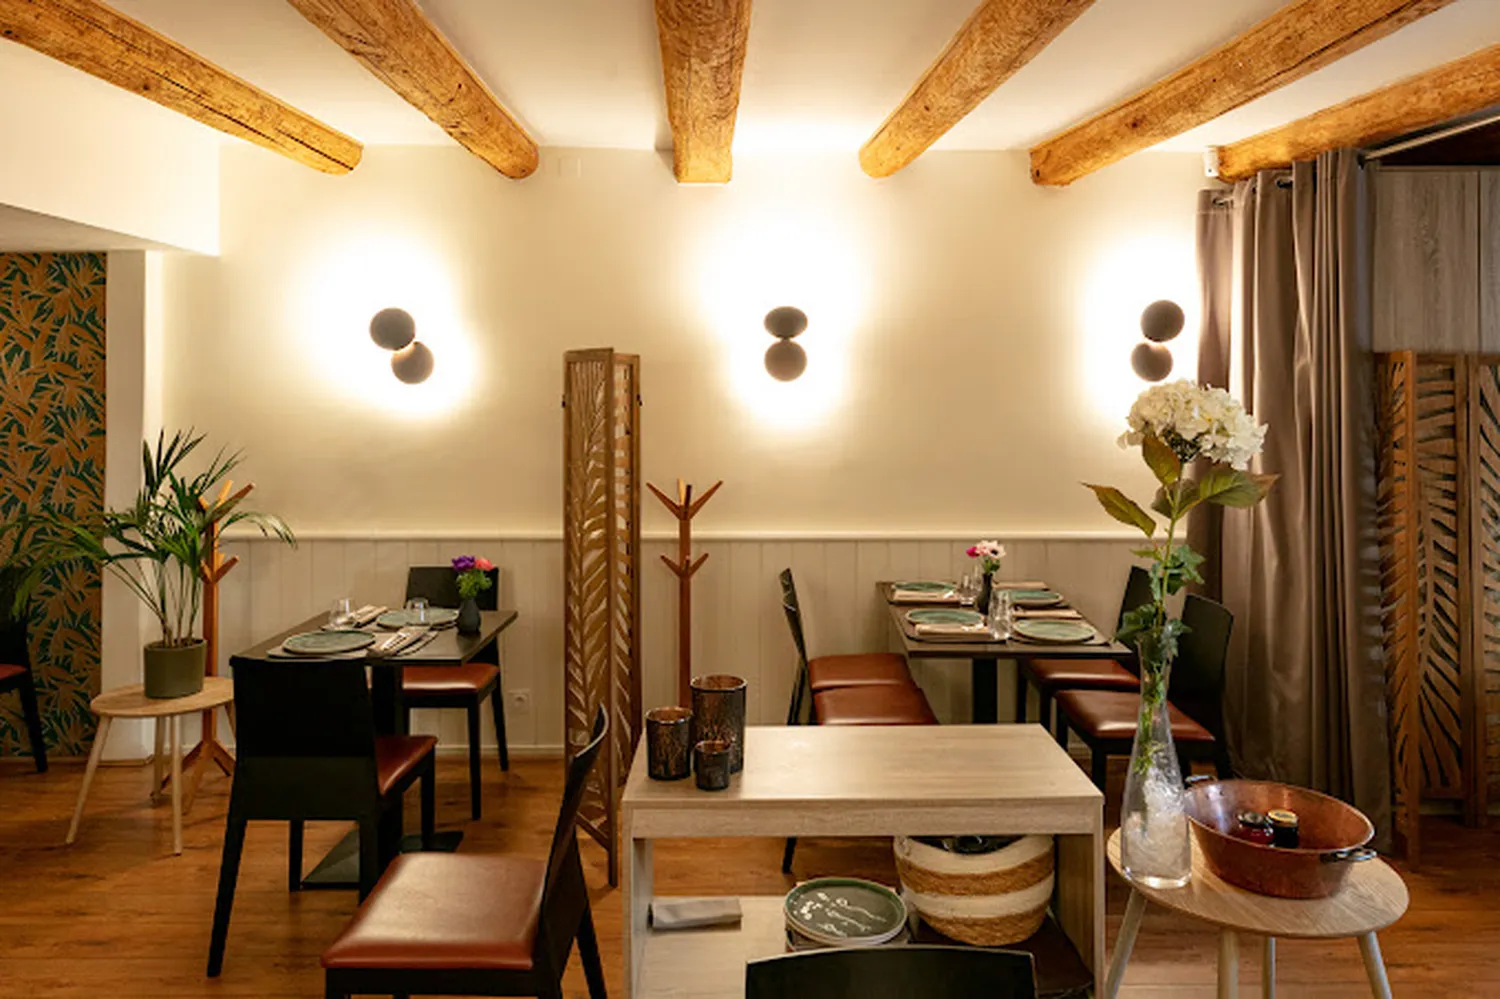 Le confidentiel Restaurant Annecy